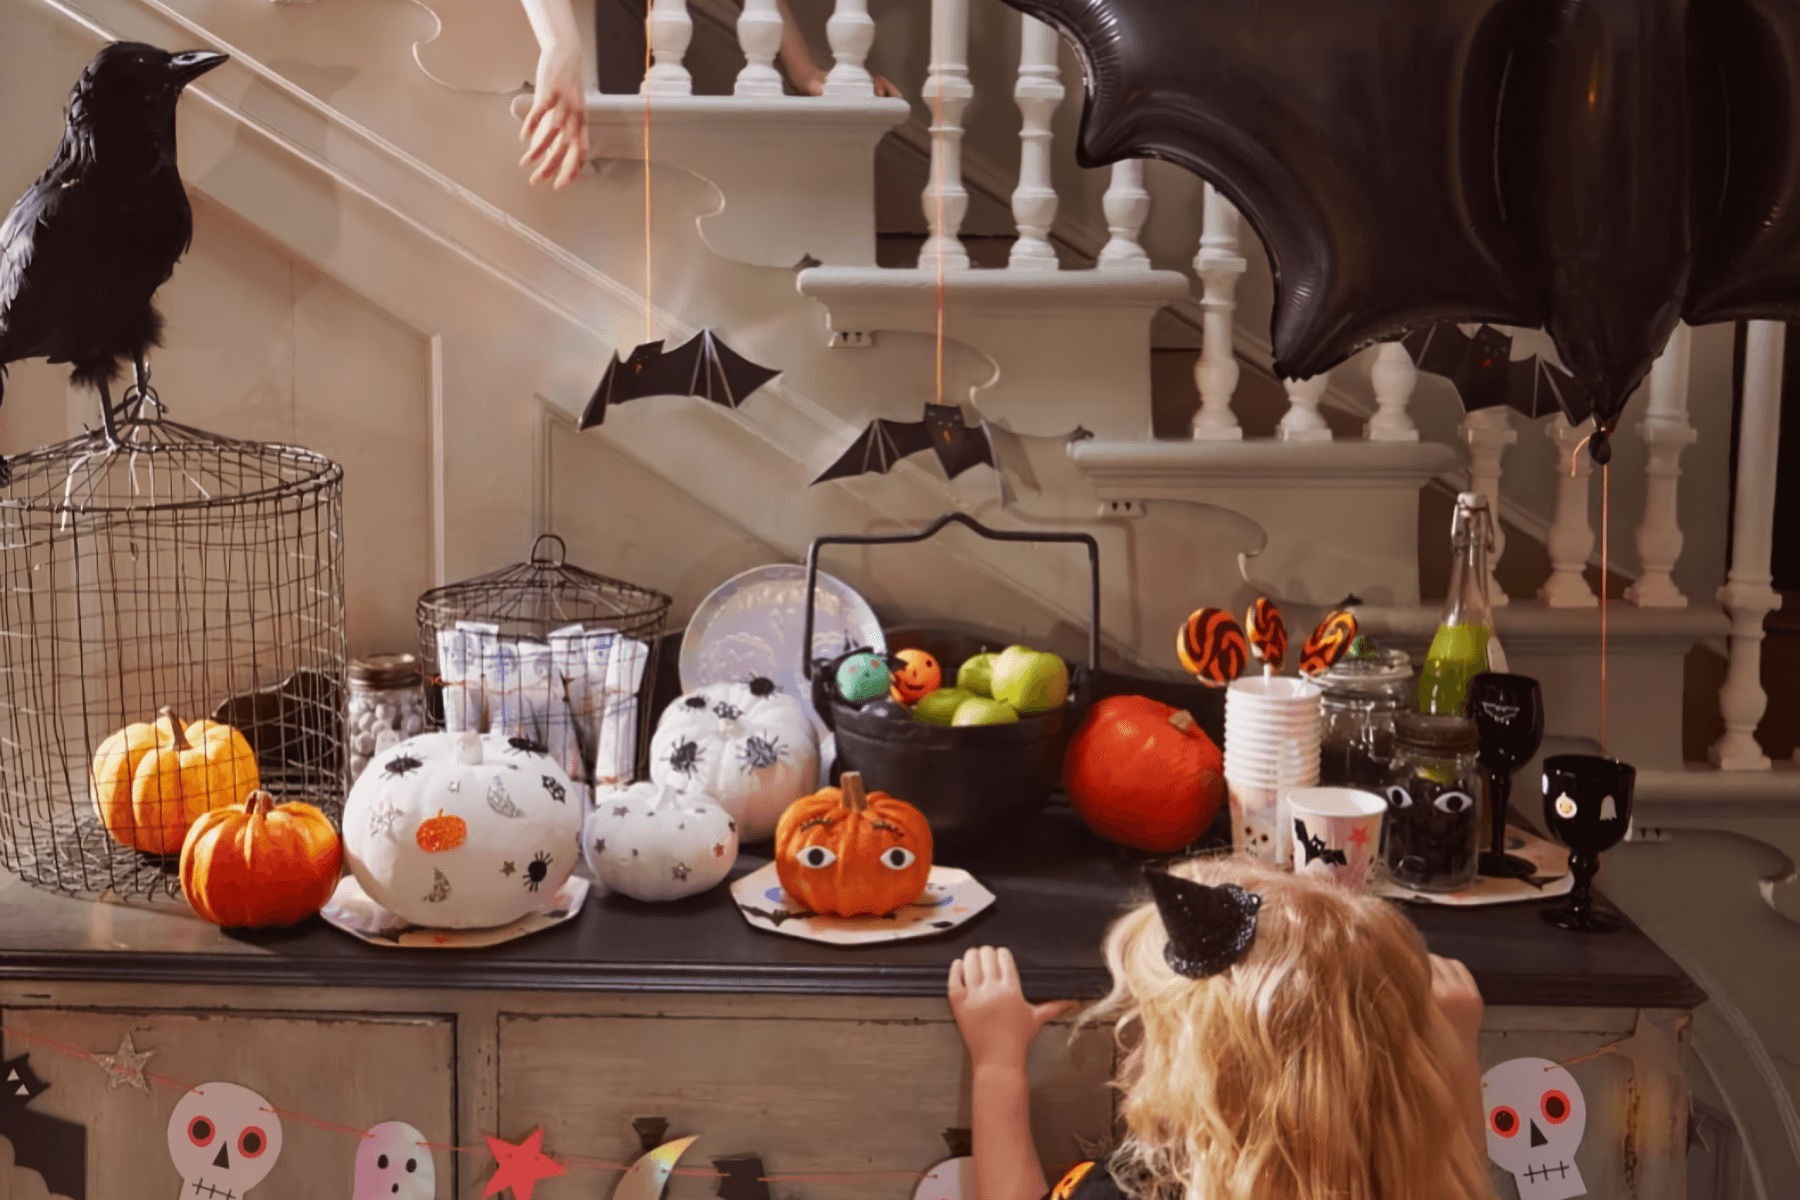 Halloween Decoration Overload - Let Me Organize It